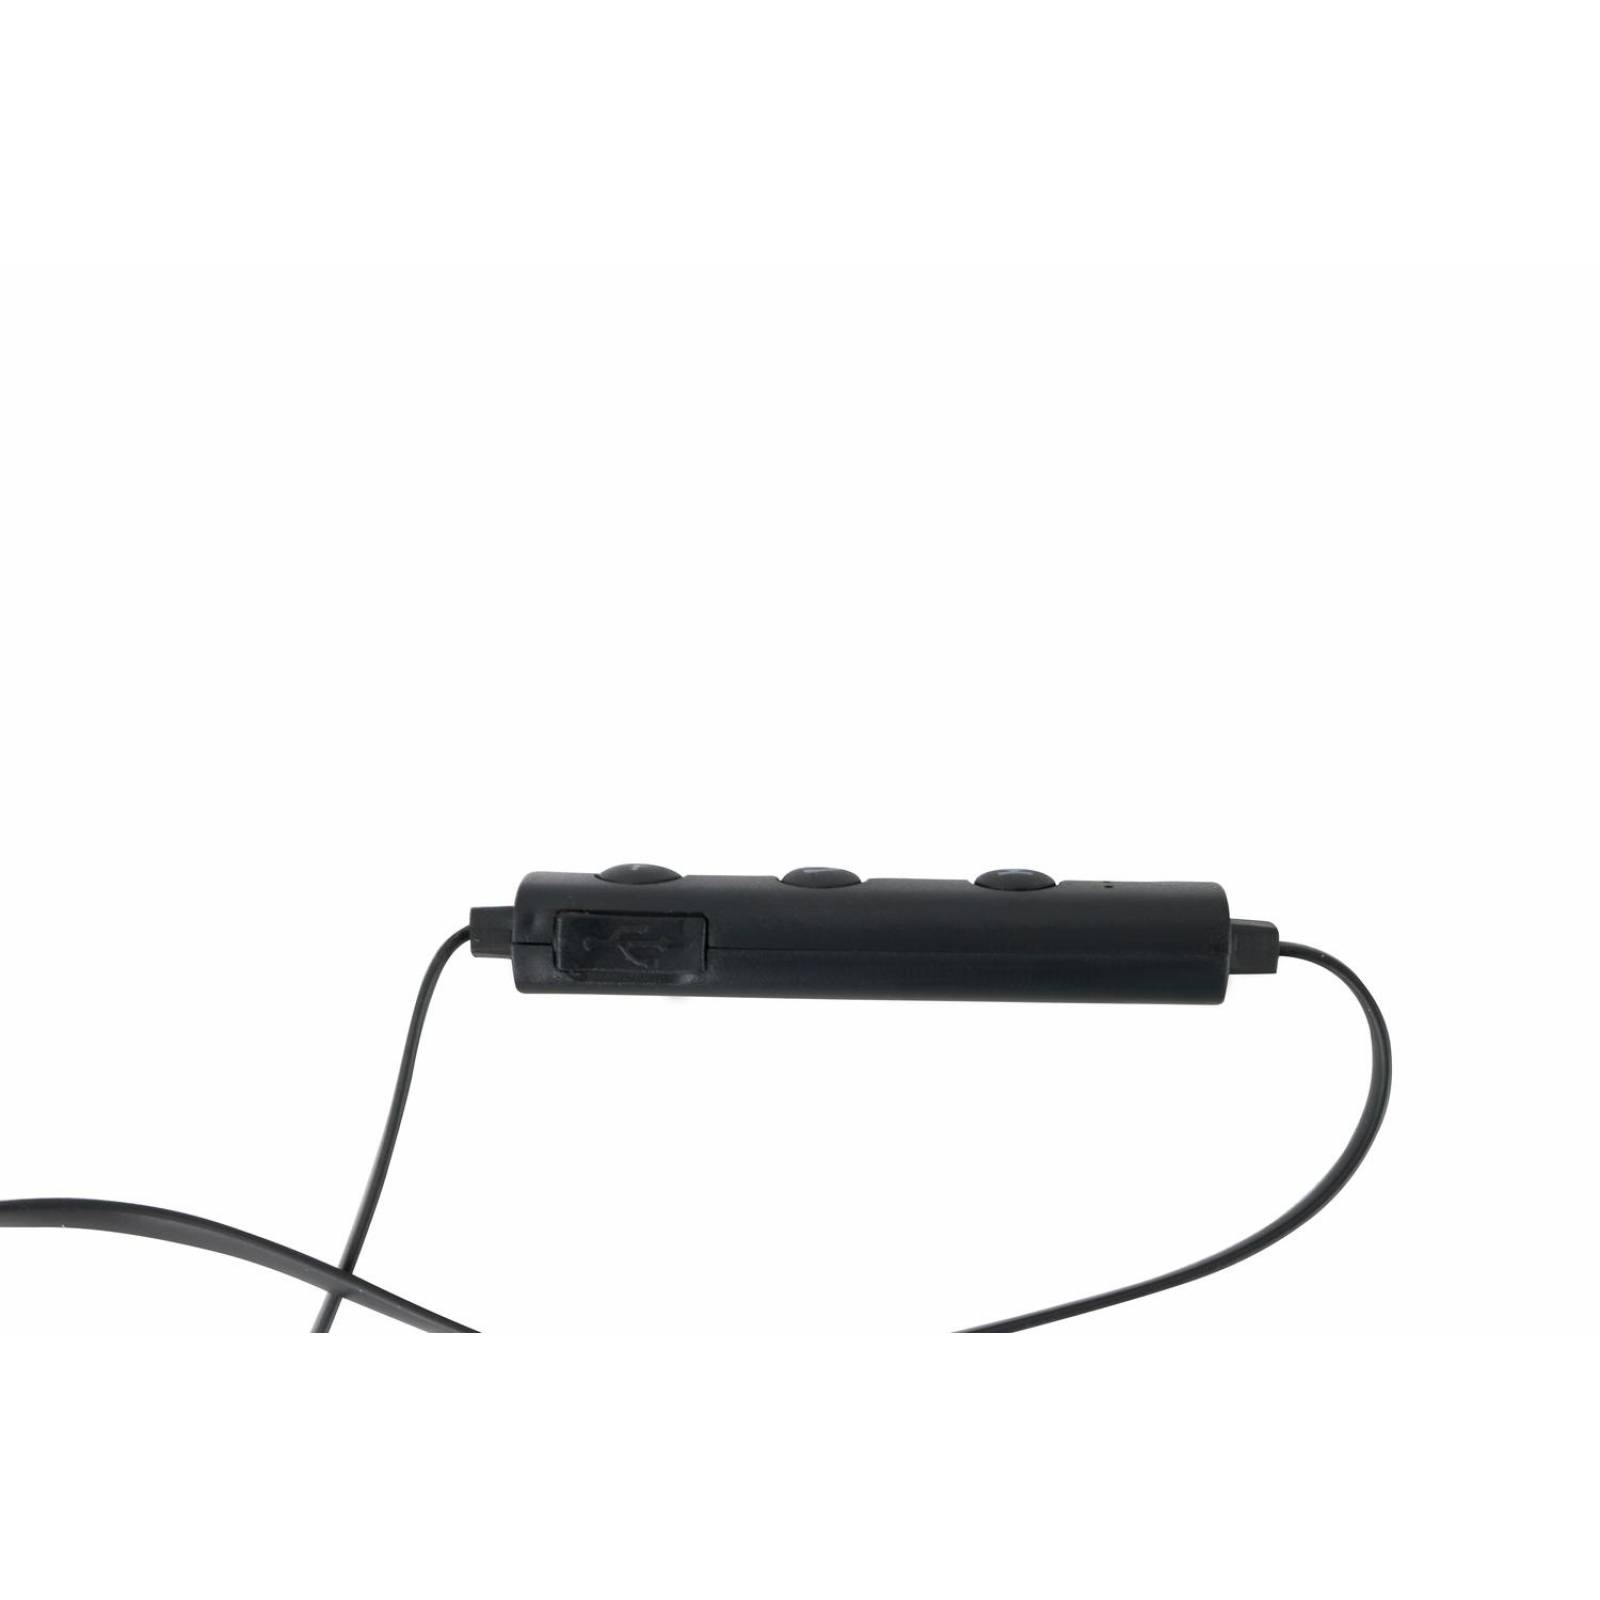 Audifonos inalámbricos bluethoot con micrófono BS-EPBTS-02 (CL) Negro